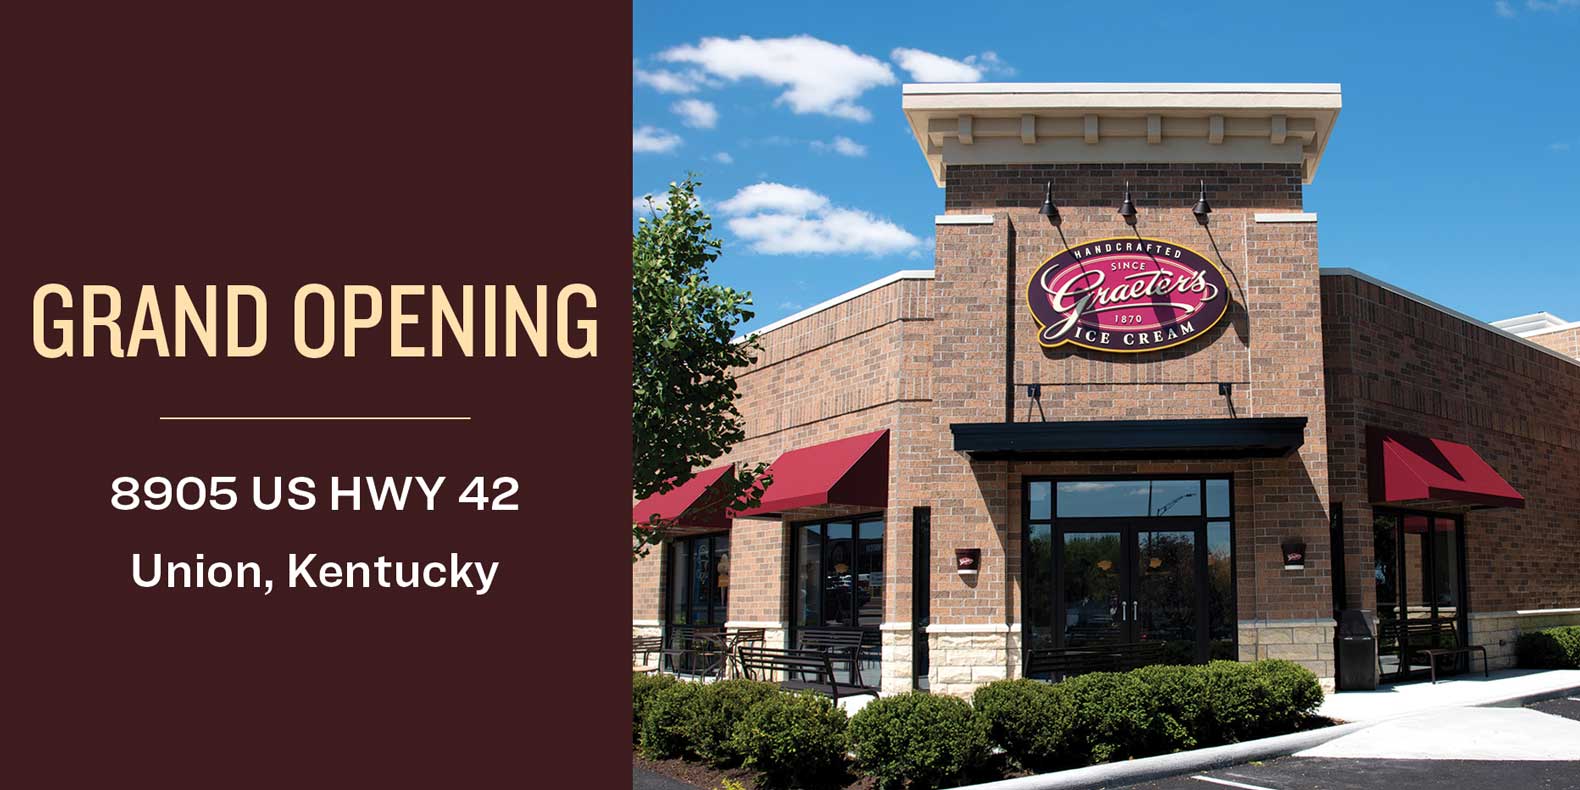 Grand Opening! Graeter's Ice Cream Celebrates Union, Kentucky Scoop Shop